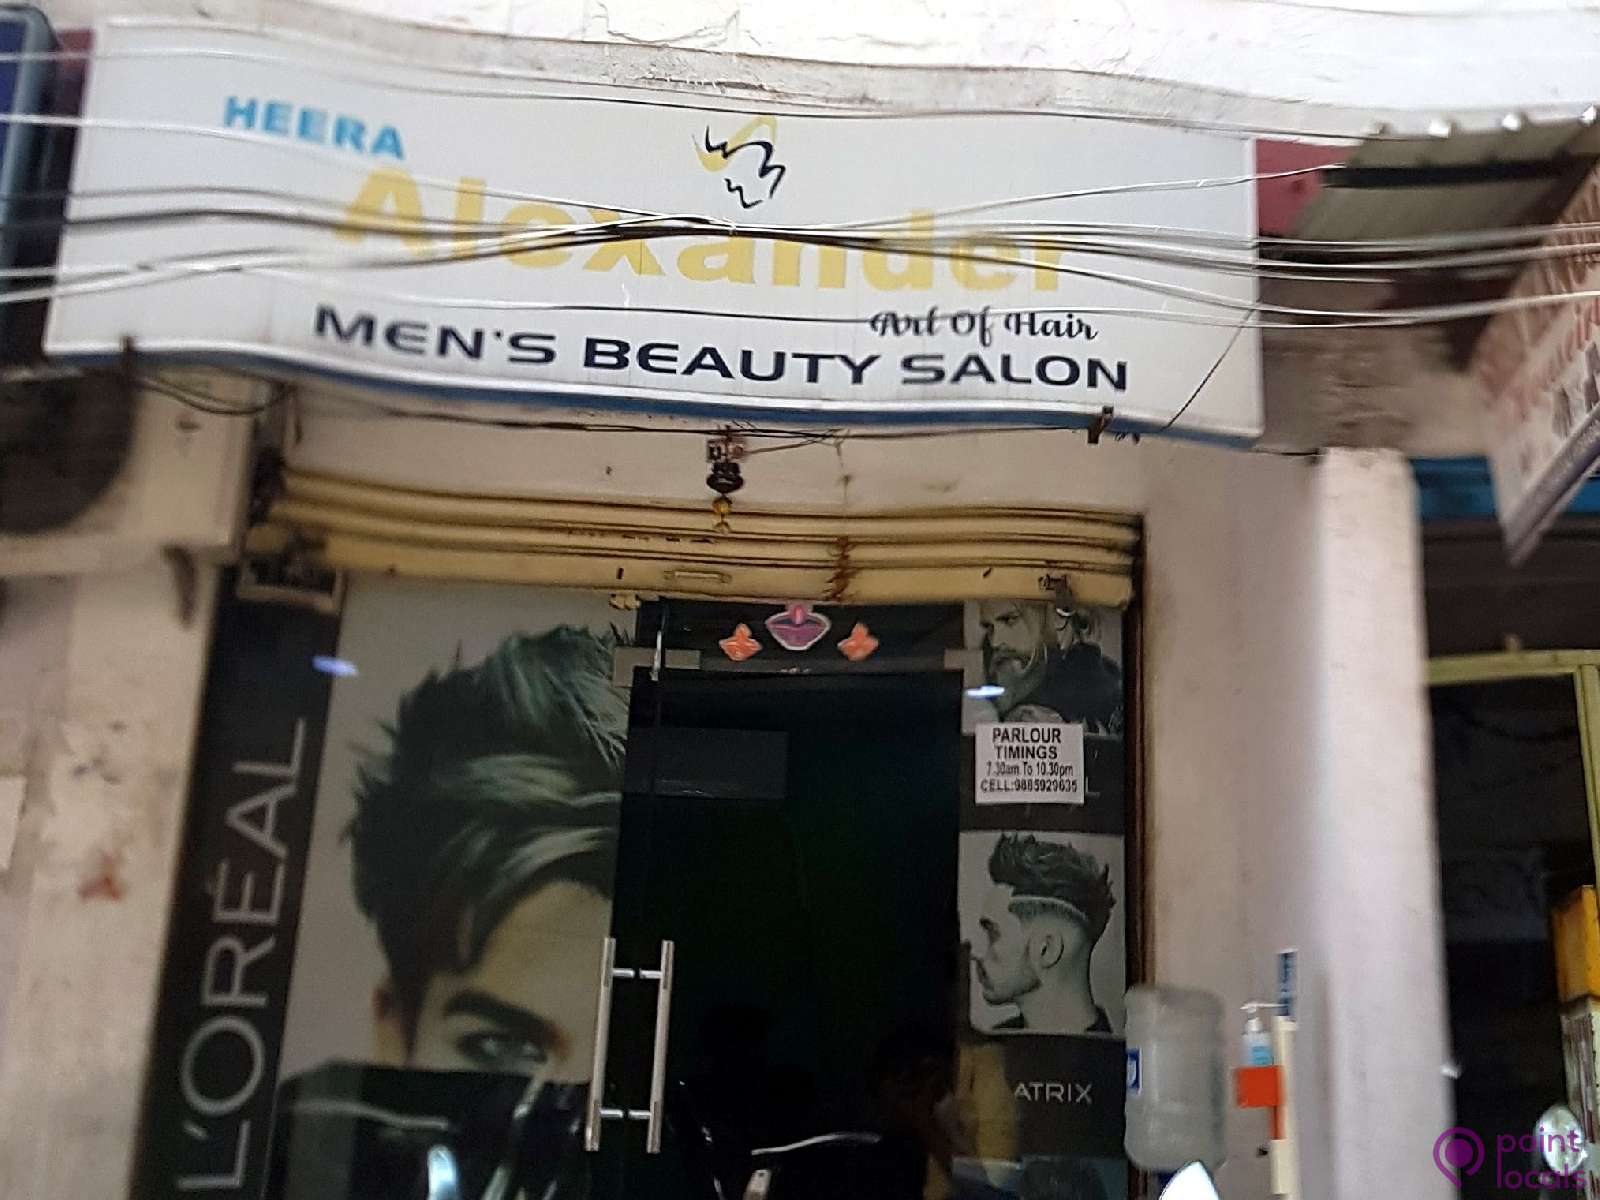 Heera Alexander Mens Beauty Salon - Beauty Salon in Hyderabad,Telangana |  Pointlocals